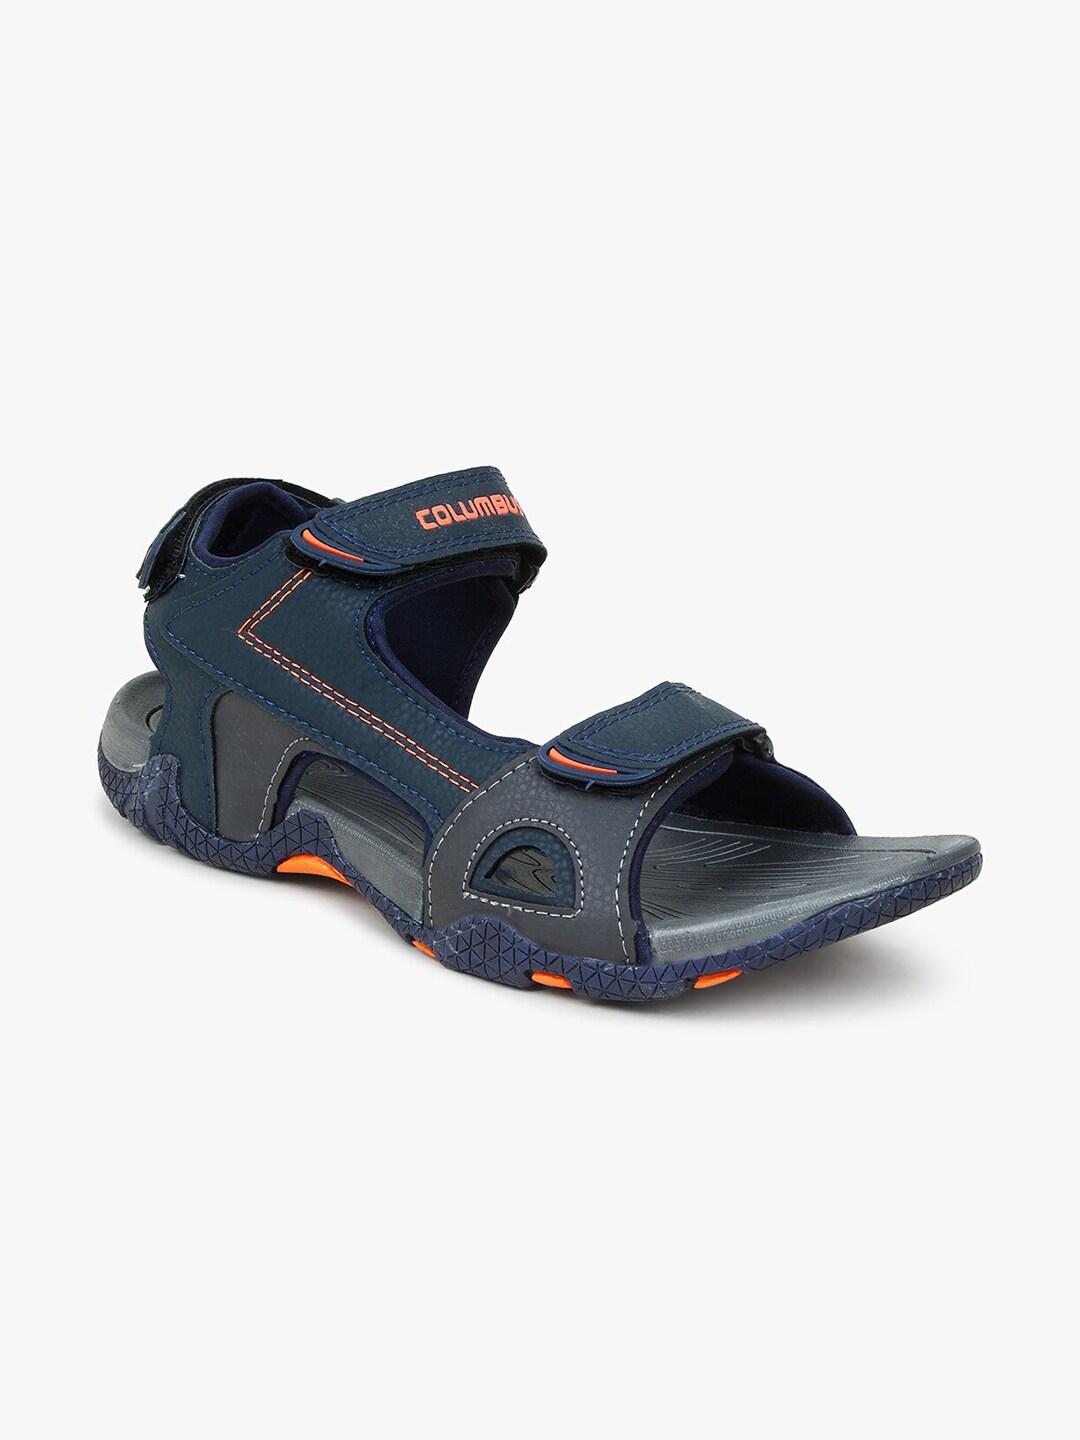 columbus-men-navy-blue-&-orange-sports-sandals